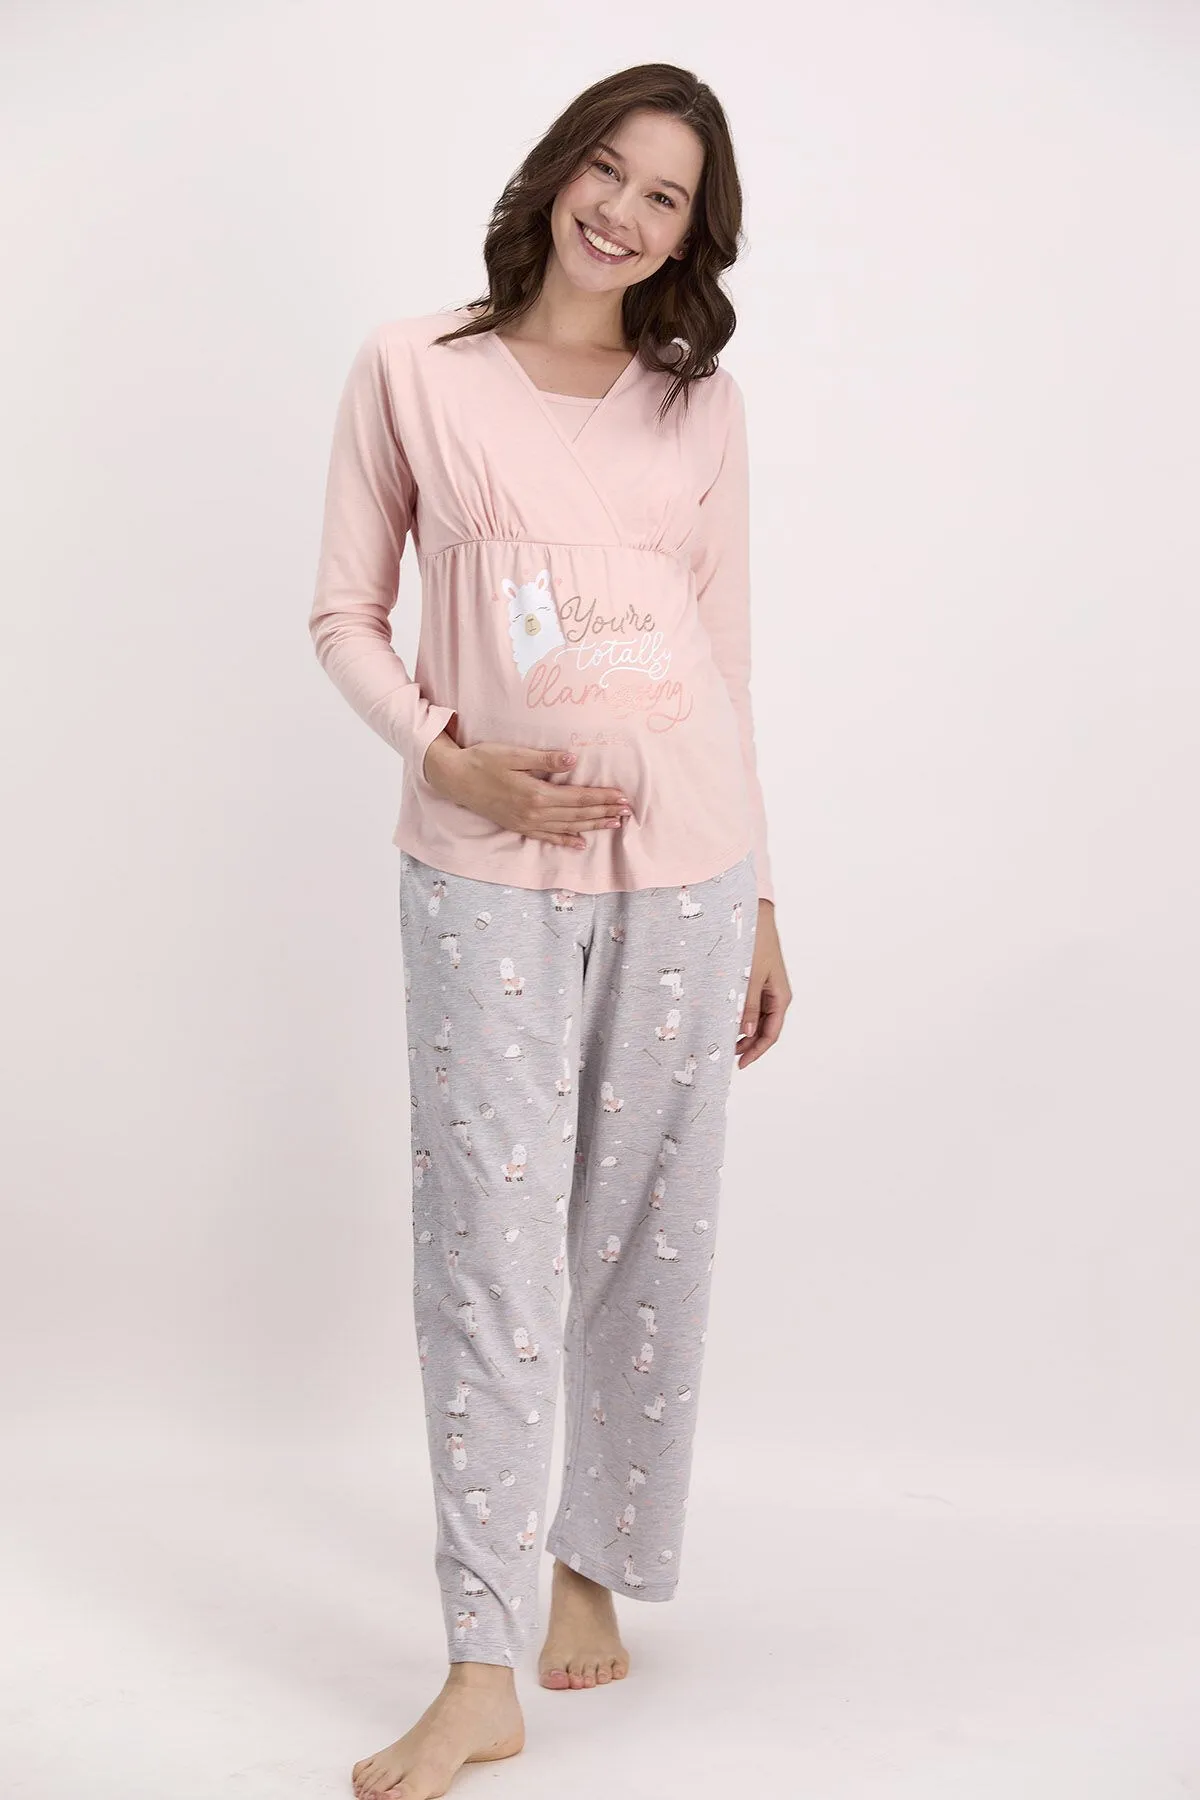 Jaju Baby, You're Totally Powder Women's Maternity Pajamas Set